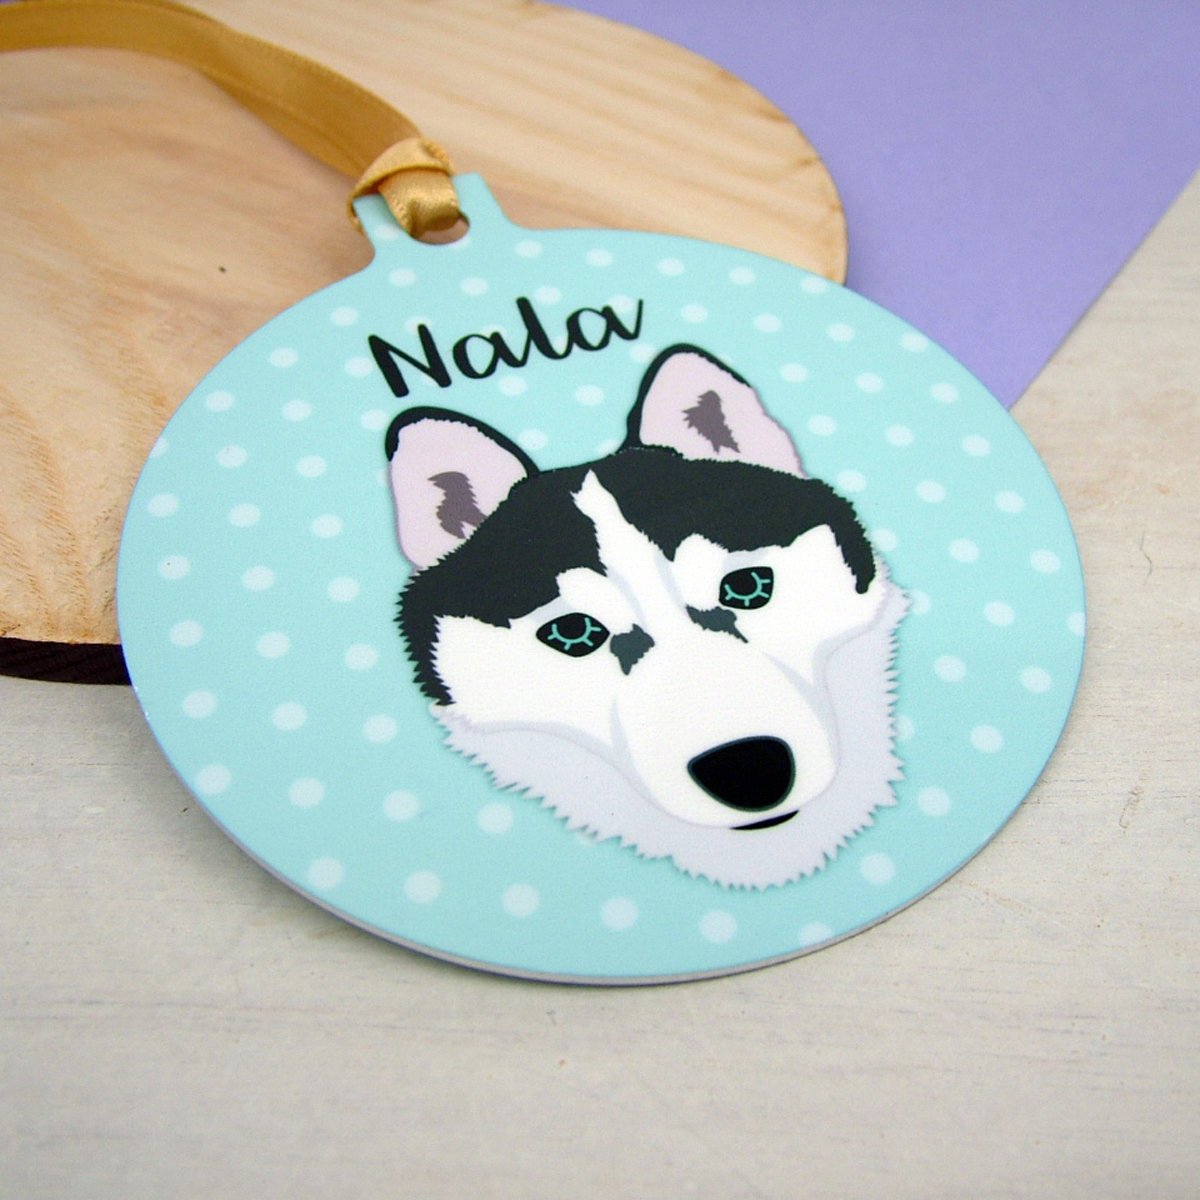 Siberian Husky Personalised Christmas Decoration - Polka Dots  - Hoobynoo - Personalised Pet Tags and Gifts